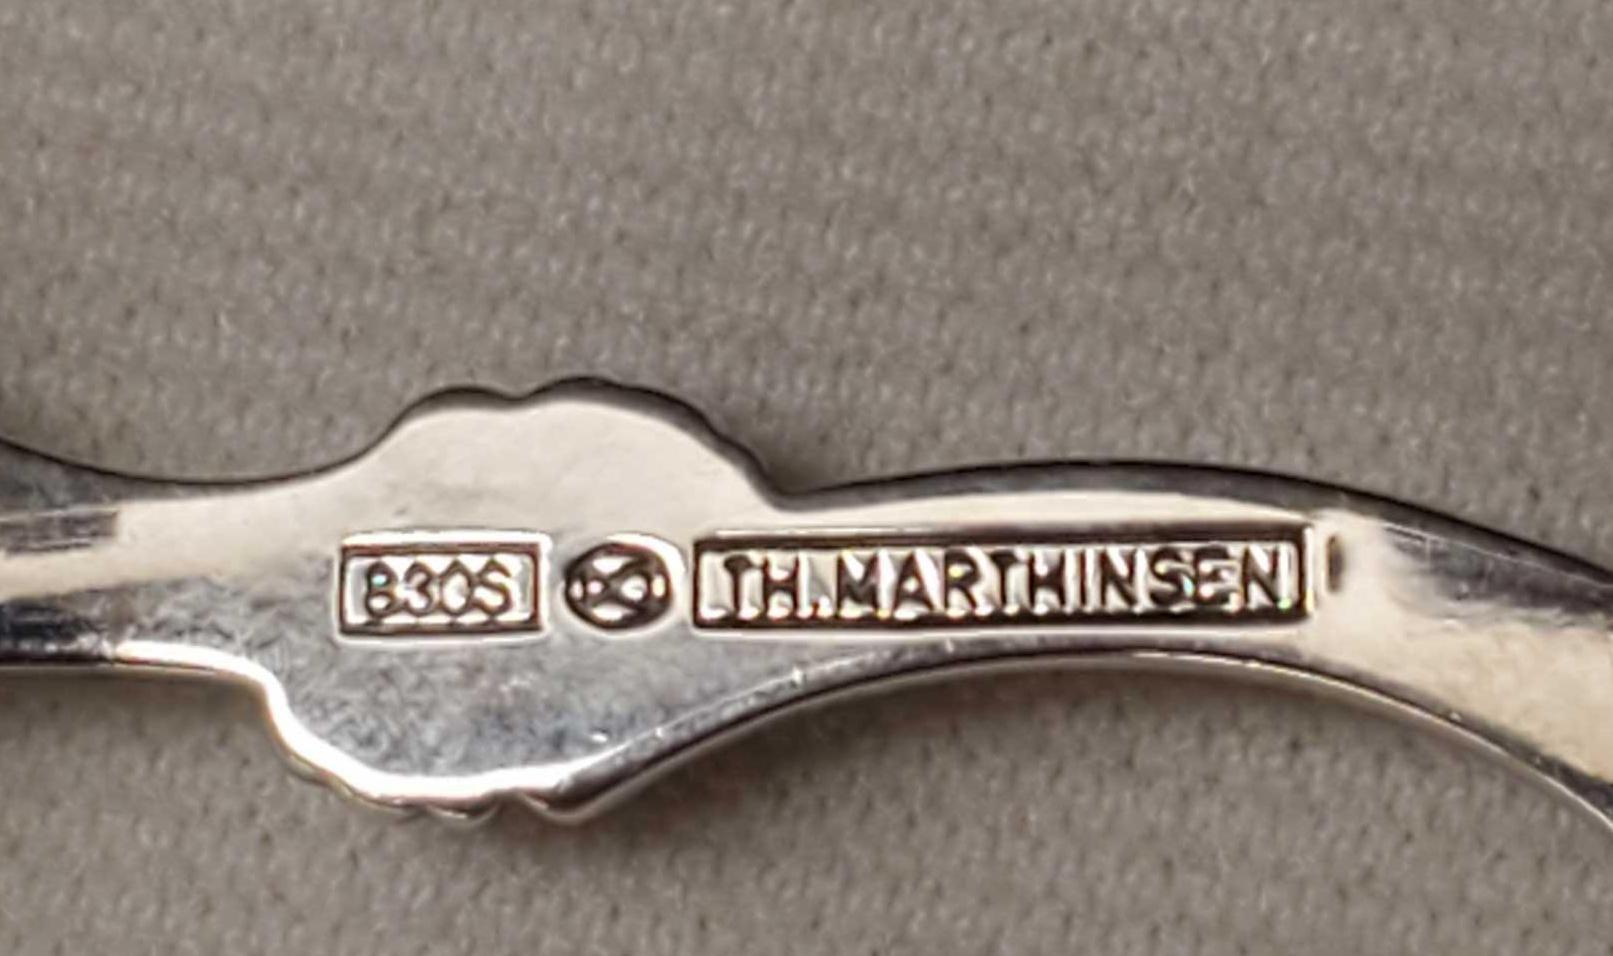 10 pcs Thorvald Mathinsen Sølvvarfabrikk 830S Norway Silver Flatware Spoons and Serving Pieces